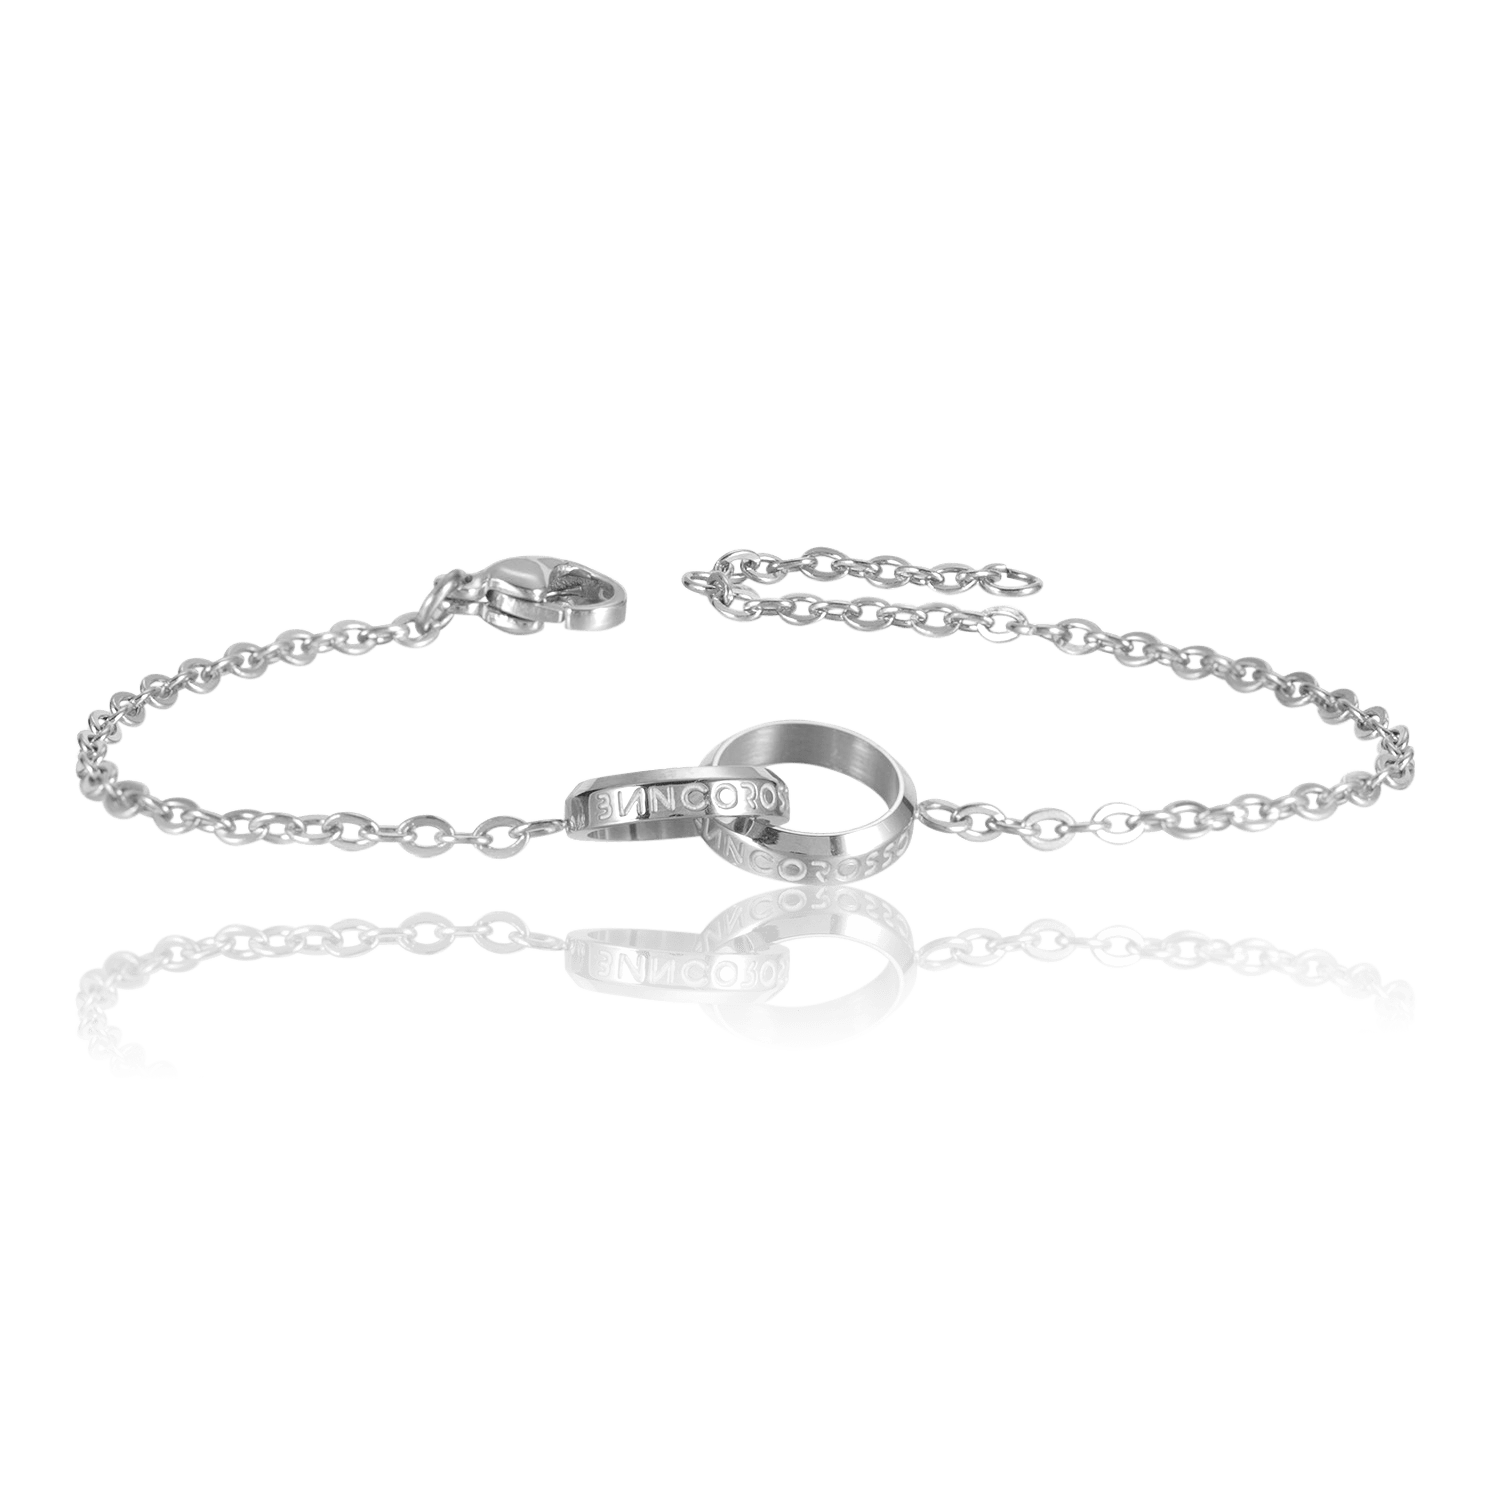 bianco rosso Bracelets To Mother - Eternity Bracelet cyprus greece jewelry gift free shipping europe worldwide